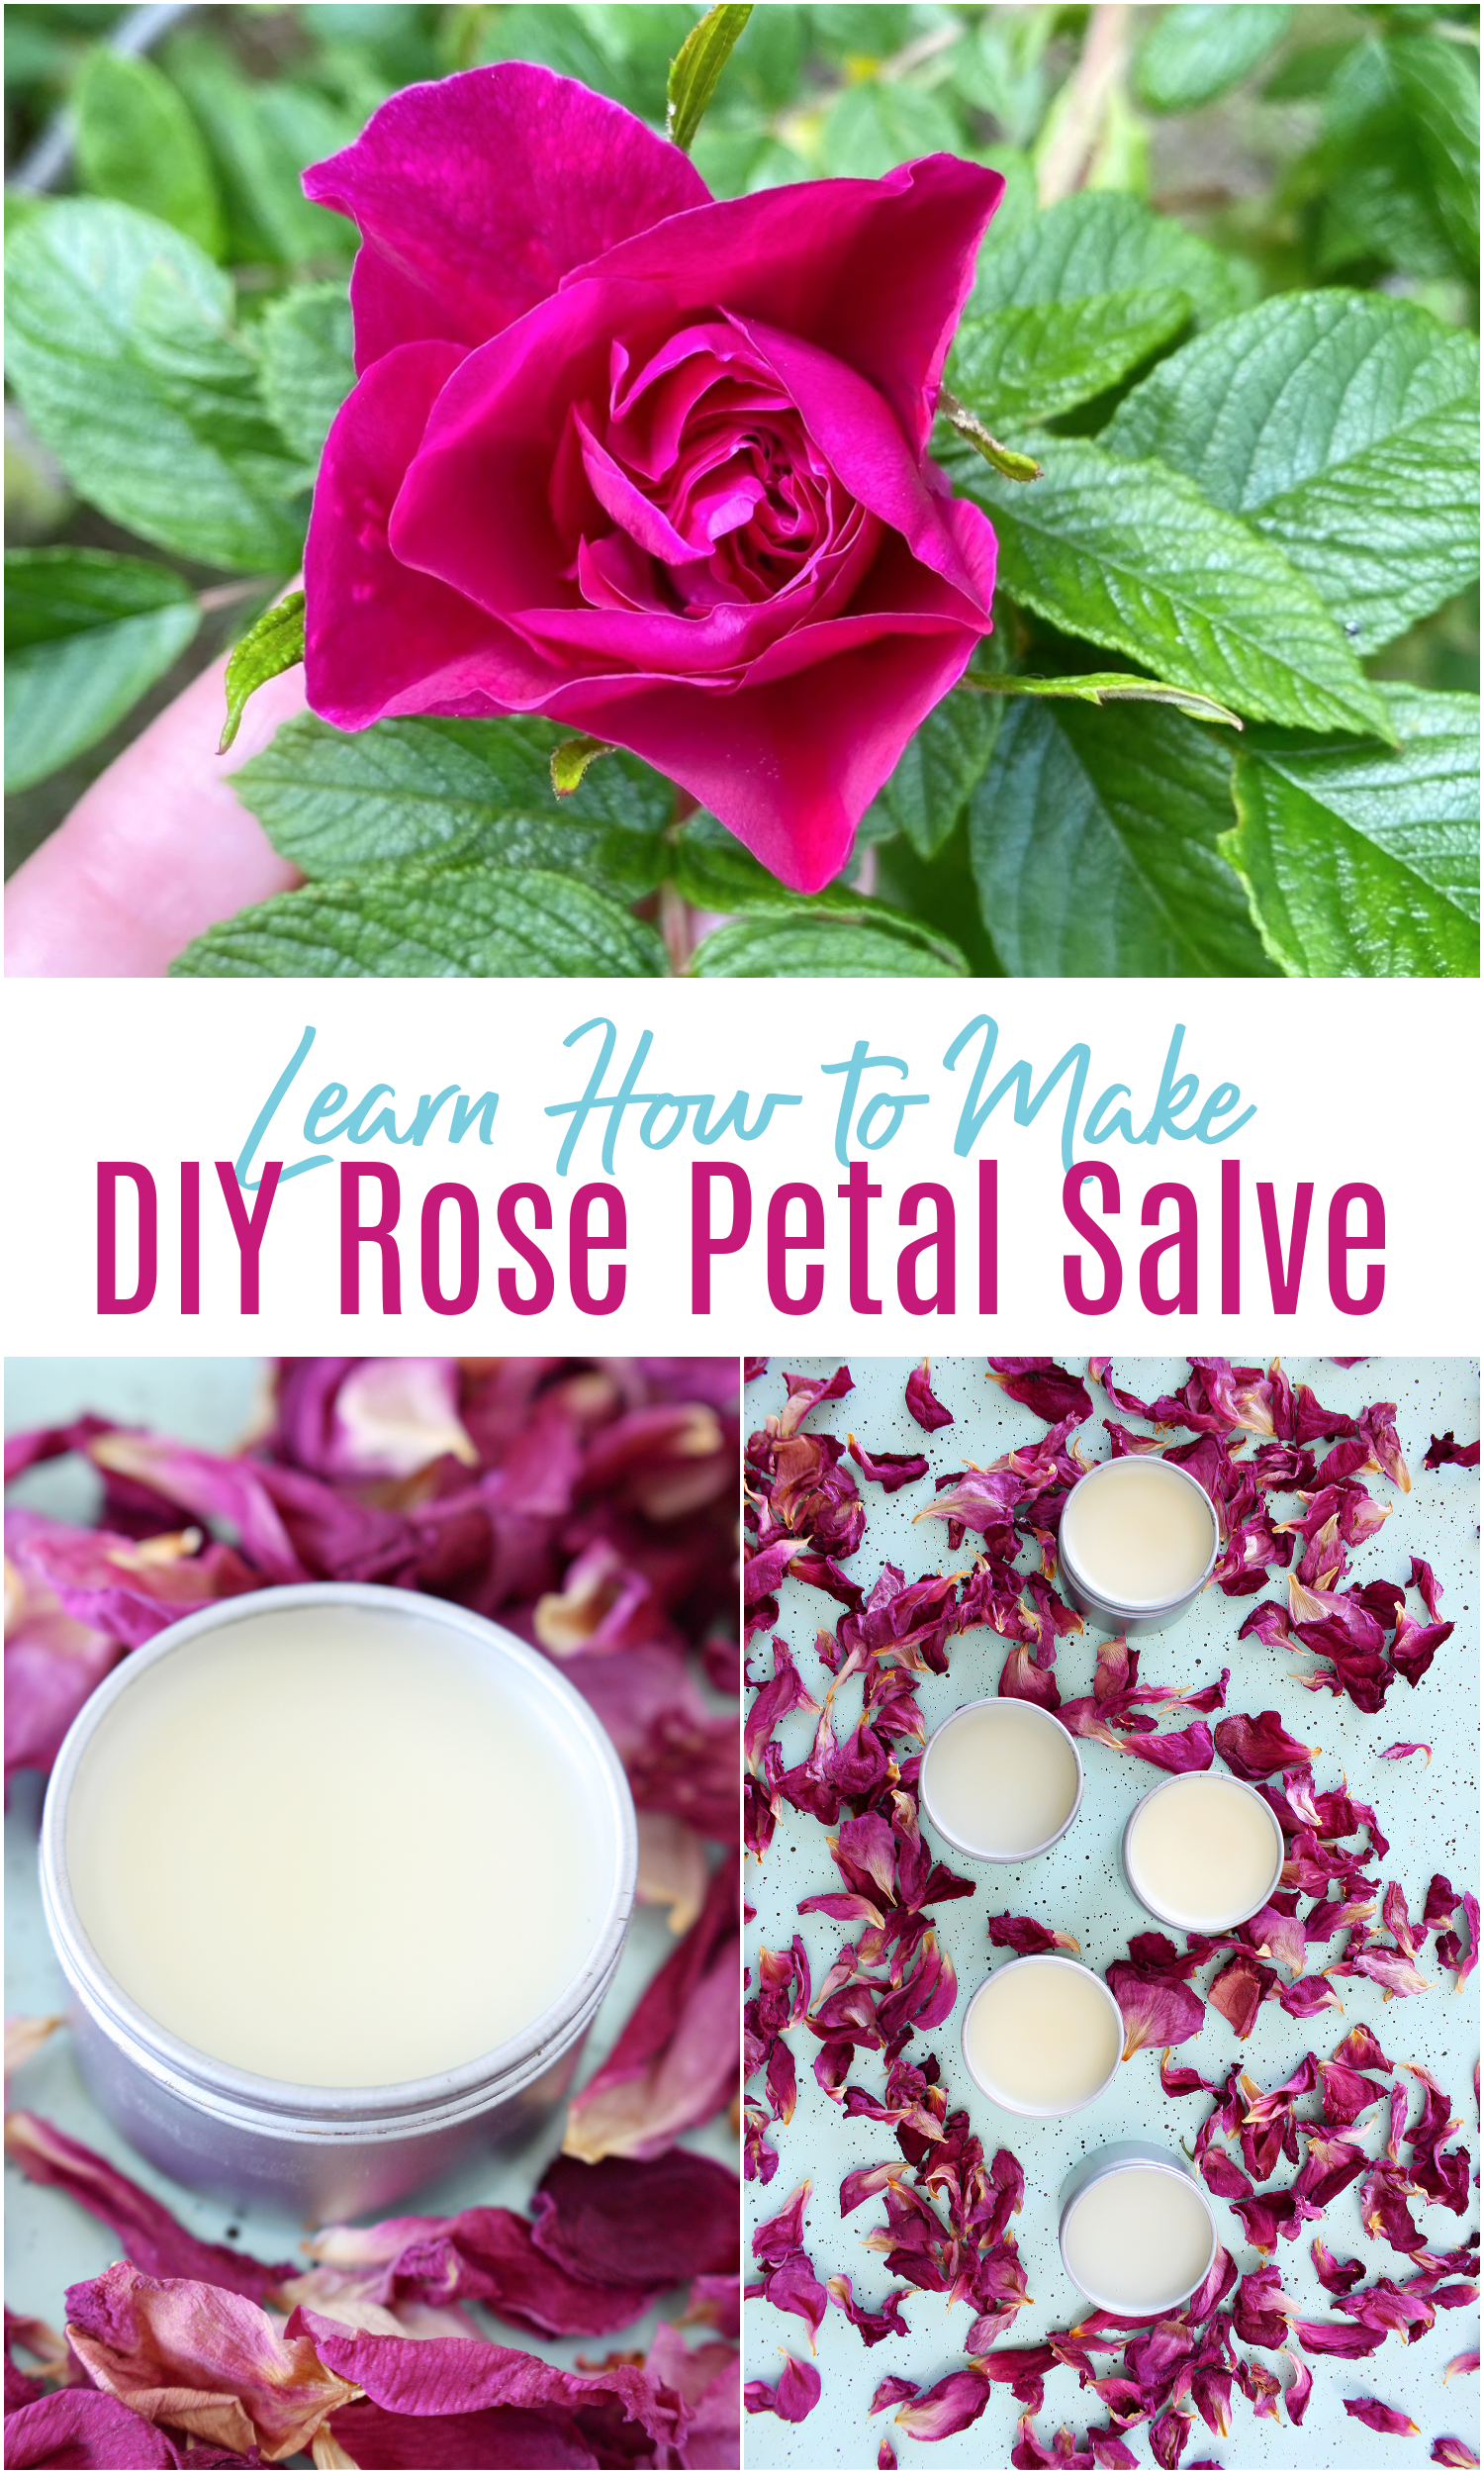 Learn How to Make DIY Rose Petal Salve